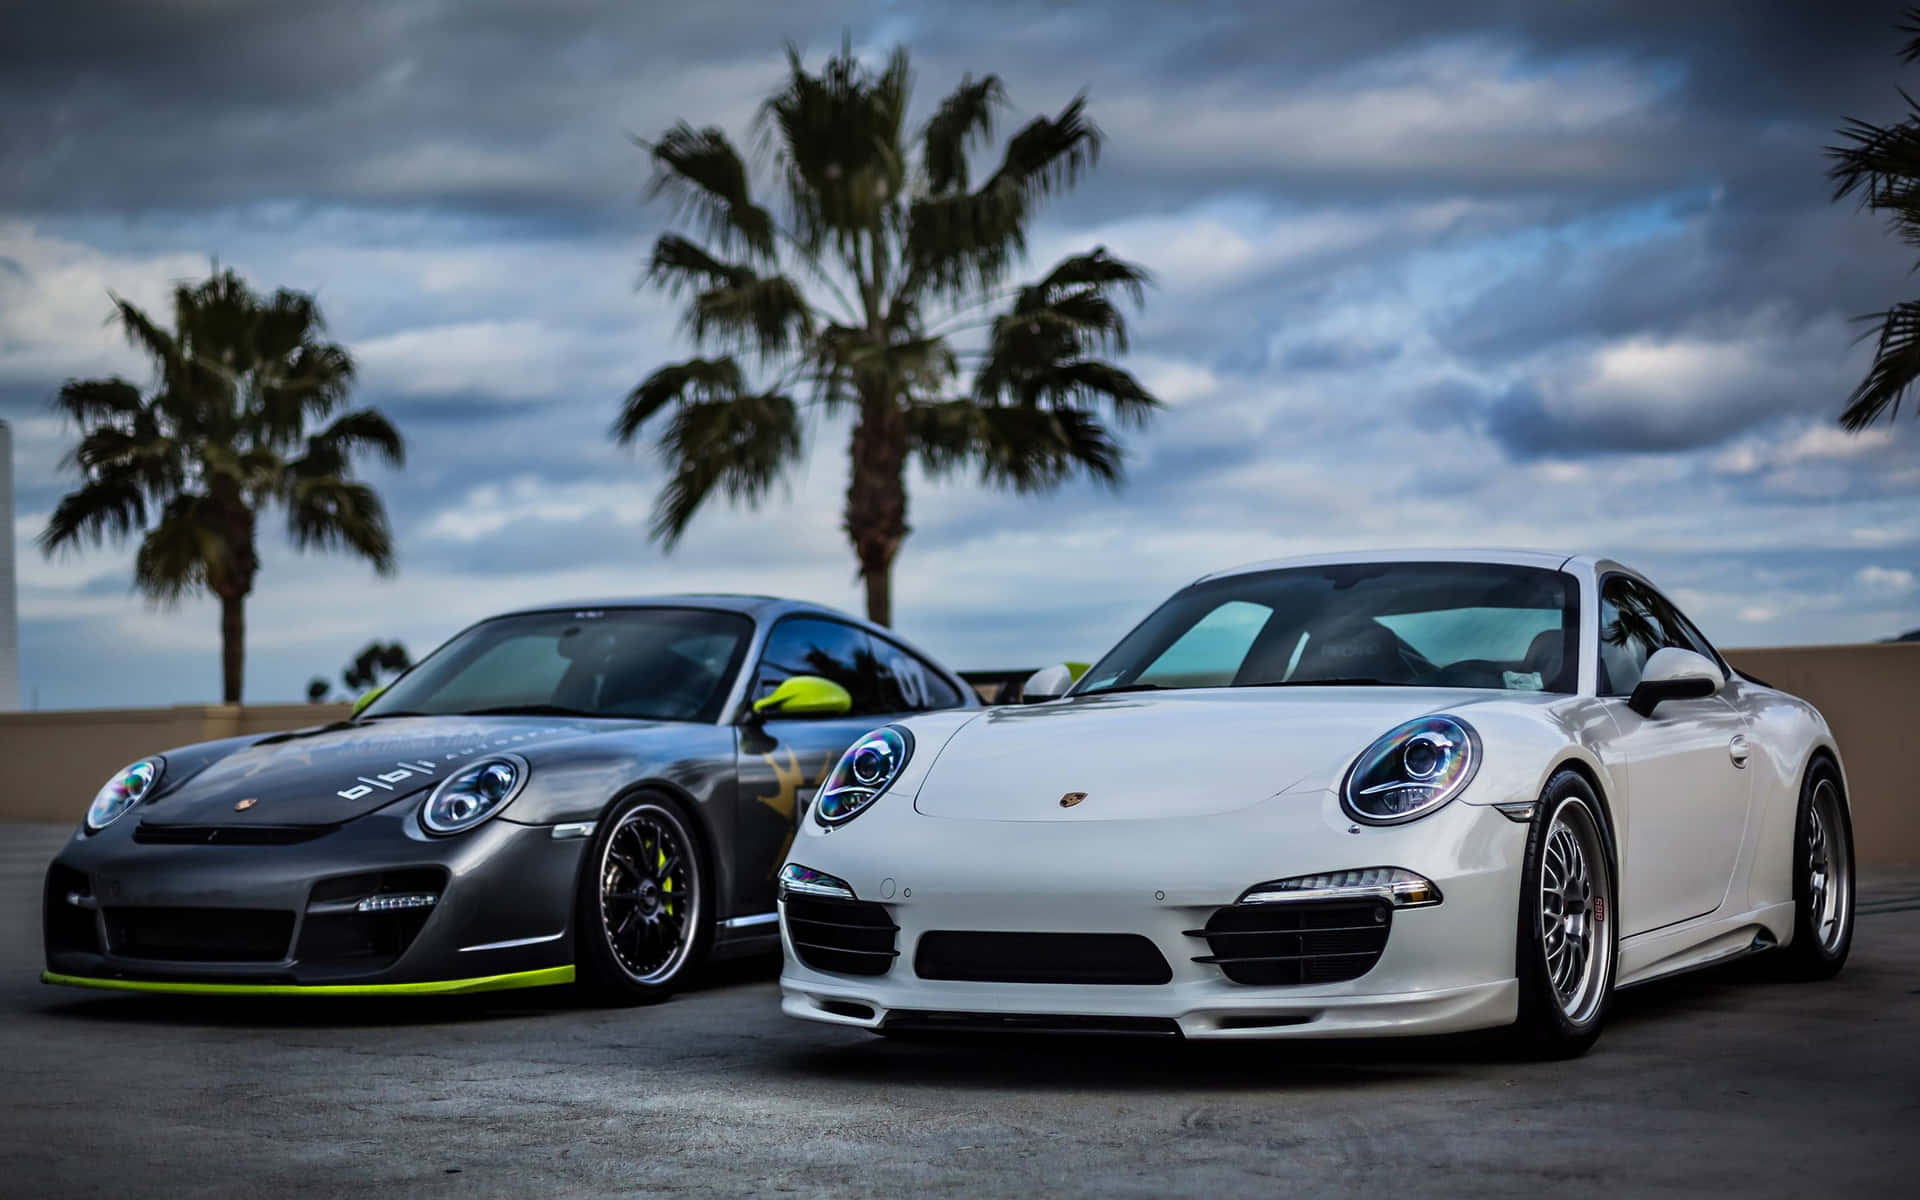 4k Ultra Hd Black And White Porsche Background